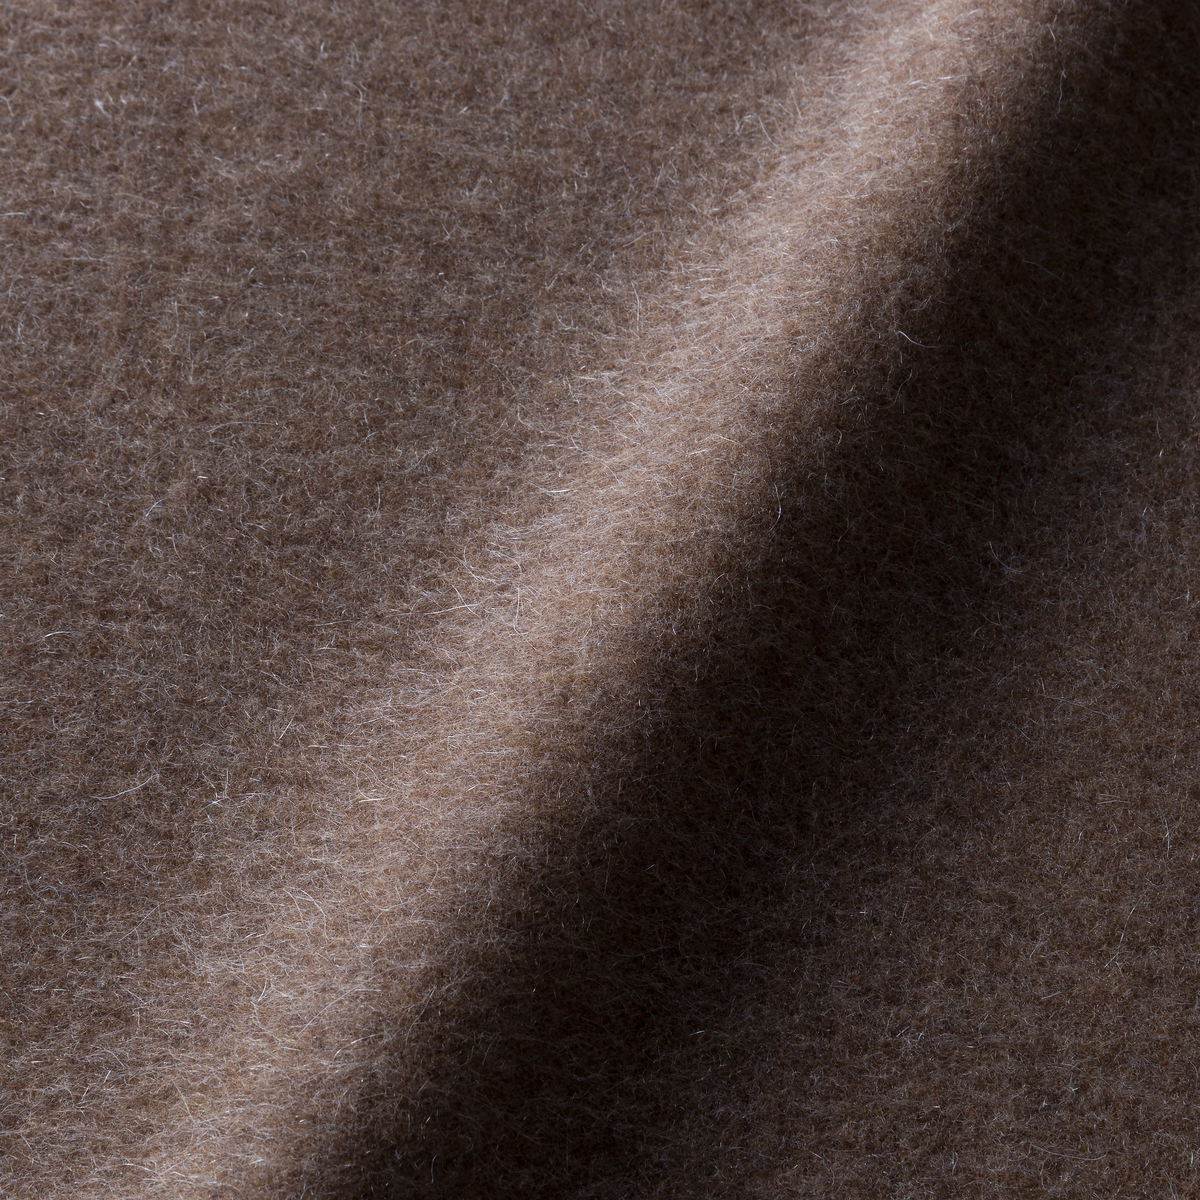 Fabric sample Blushing Sloth Mohair brown